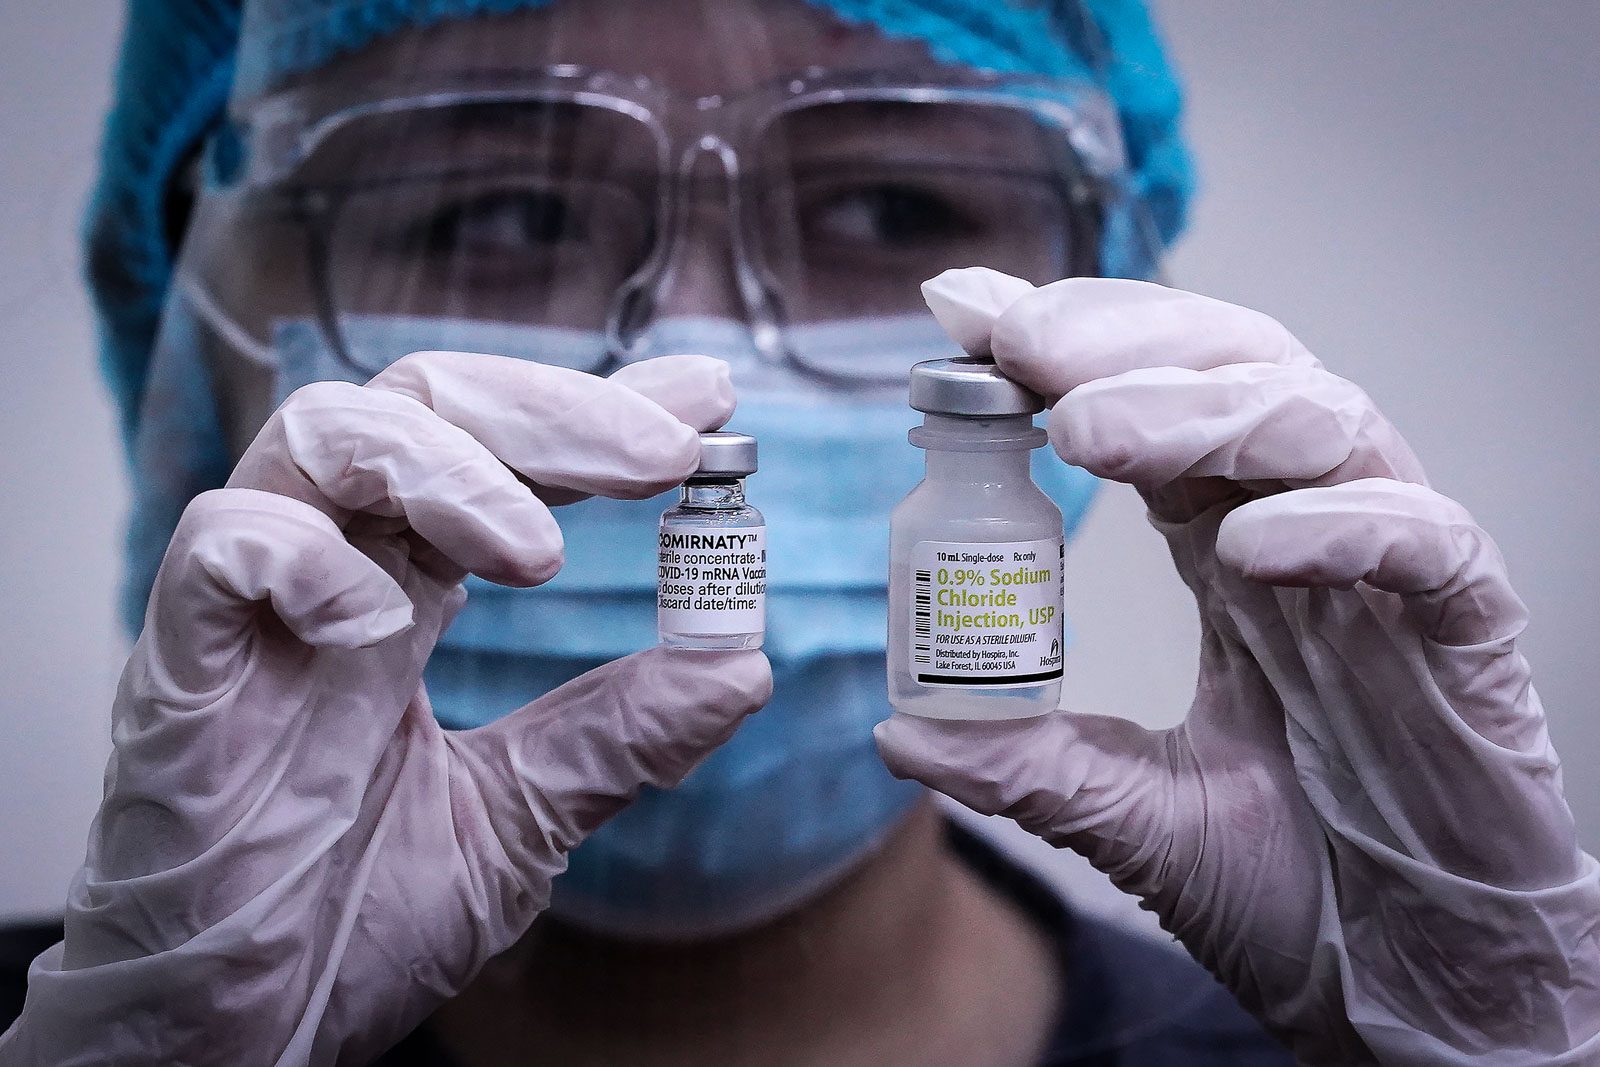 Metro Manila LGUs crack down on ‘vaccines for sale’